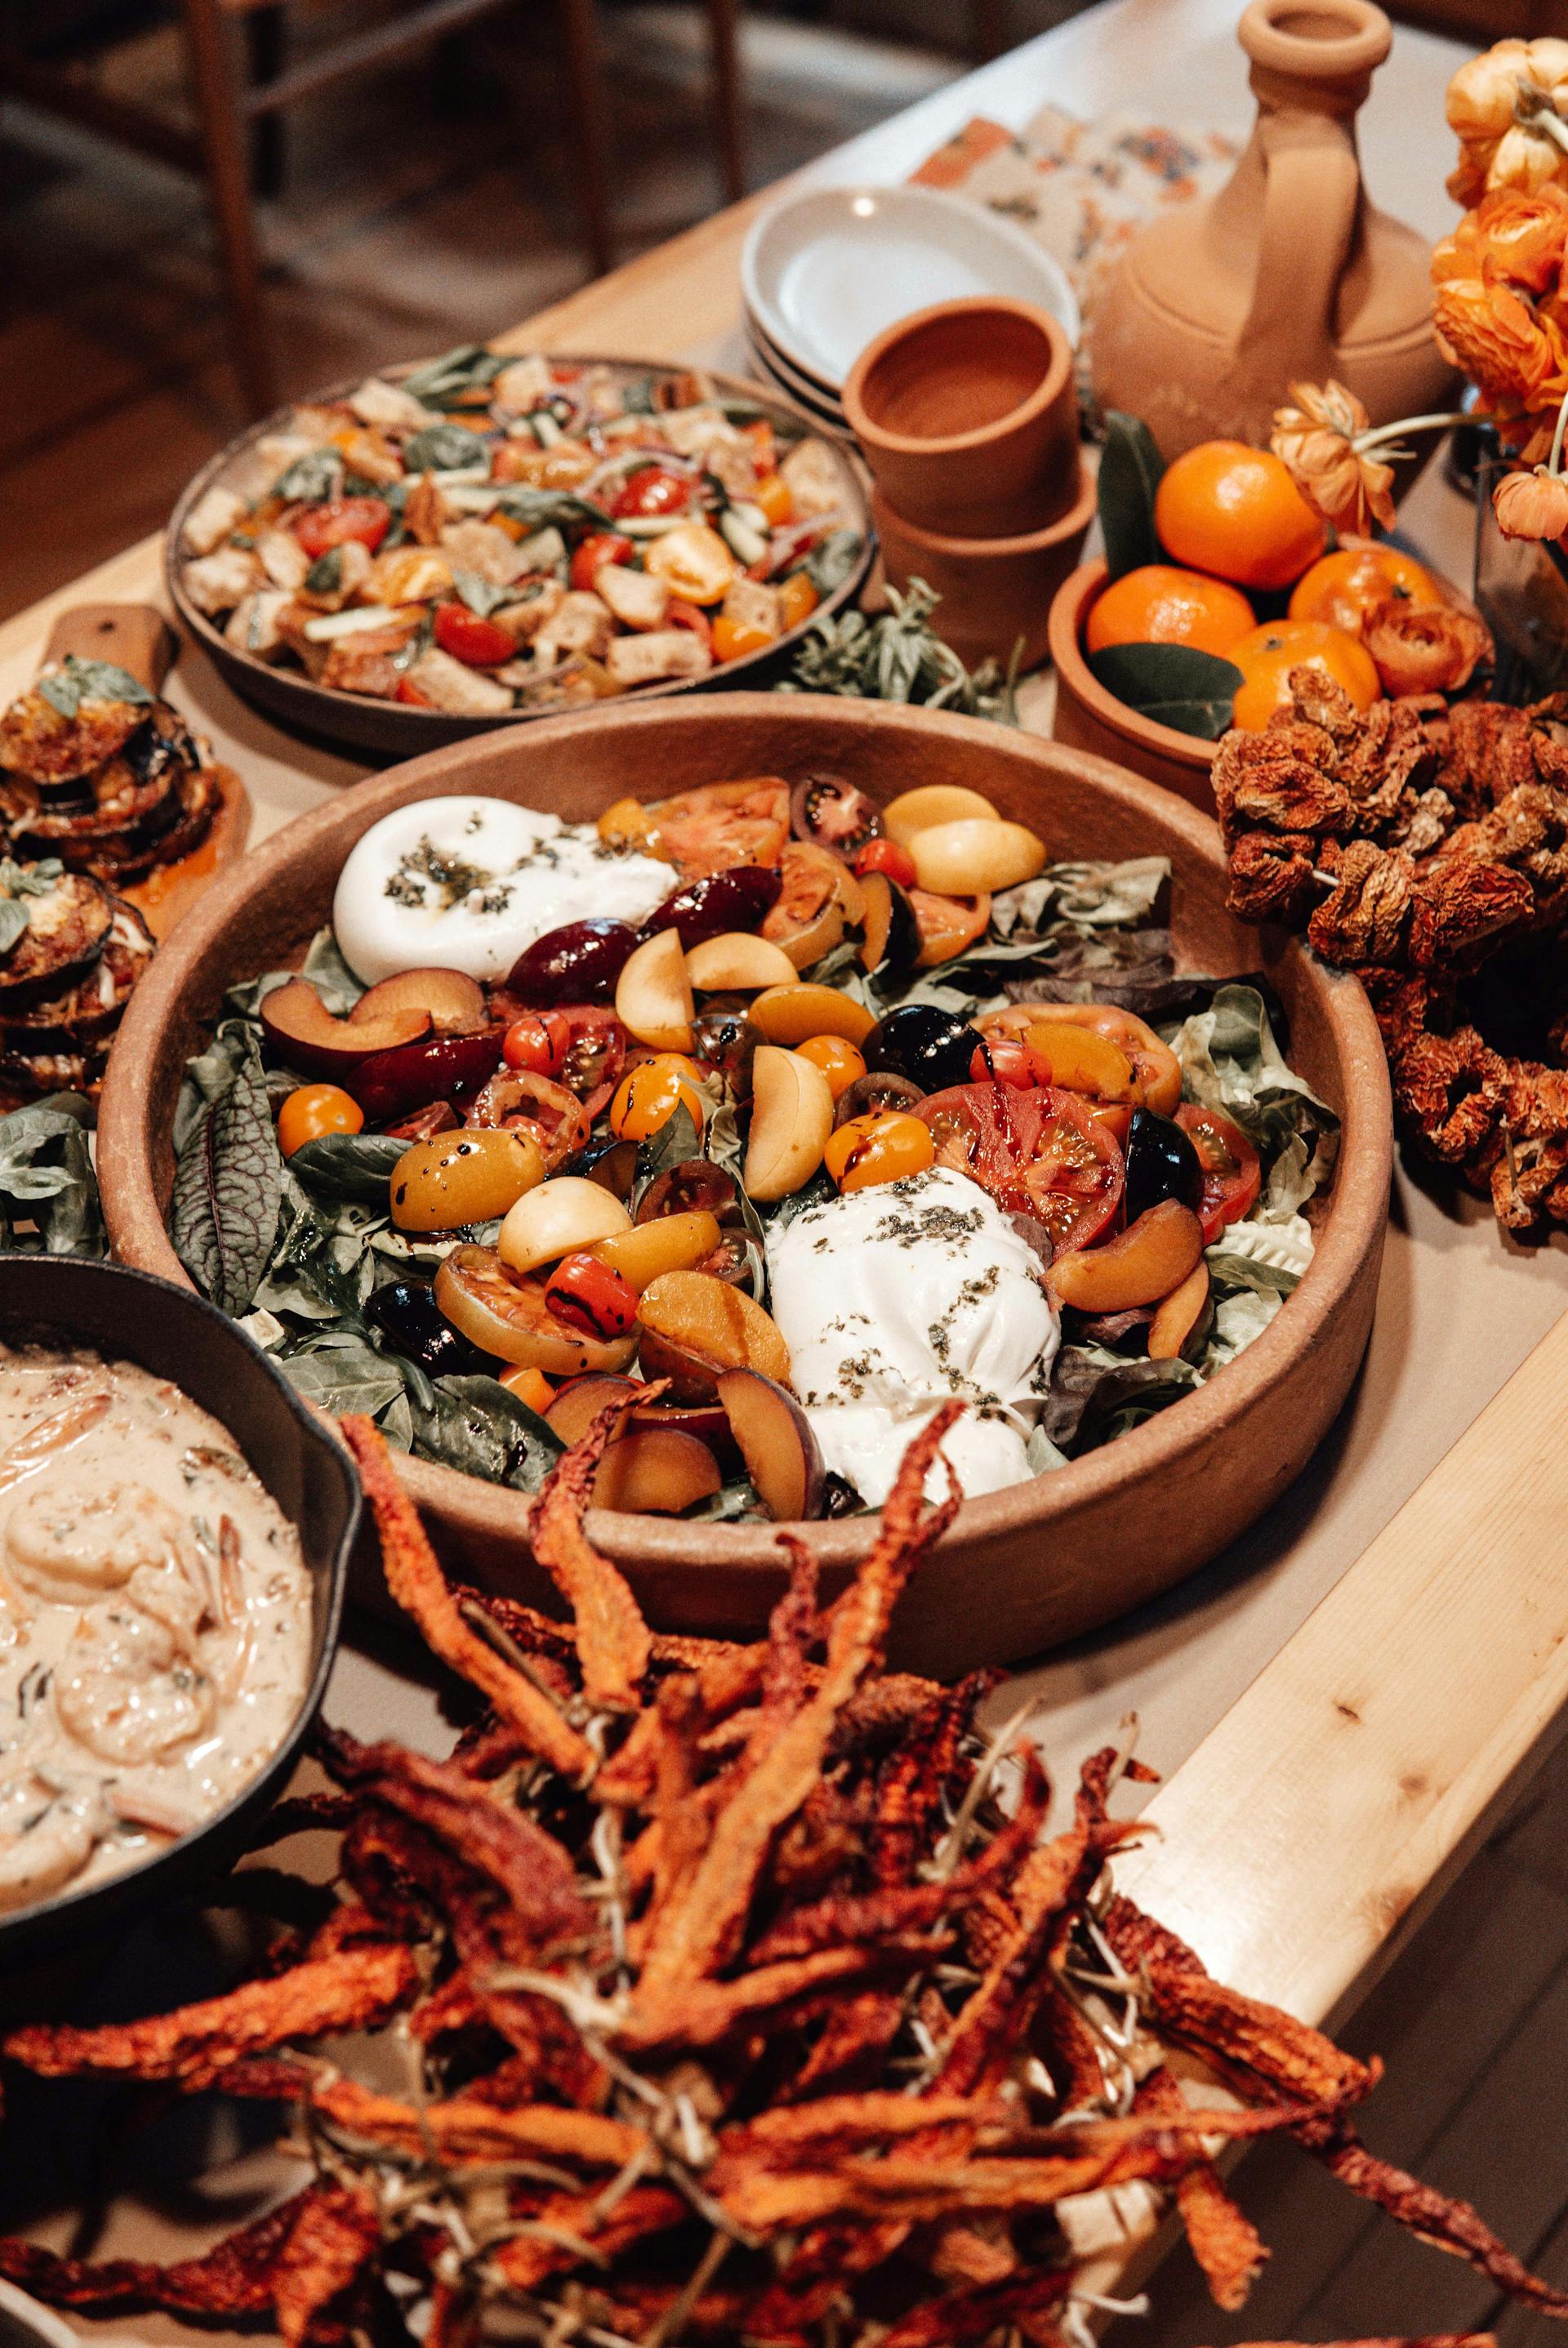 Une table pleine de nourriture | Source : Pexels